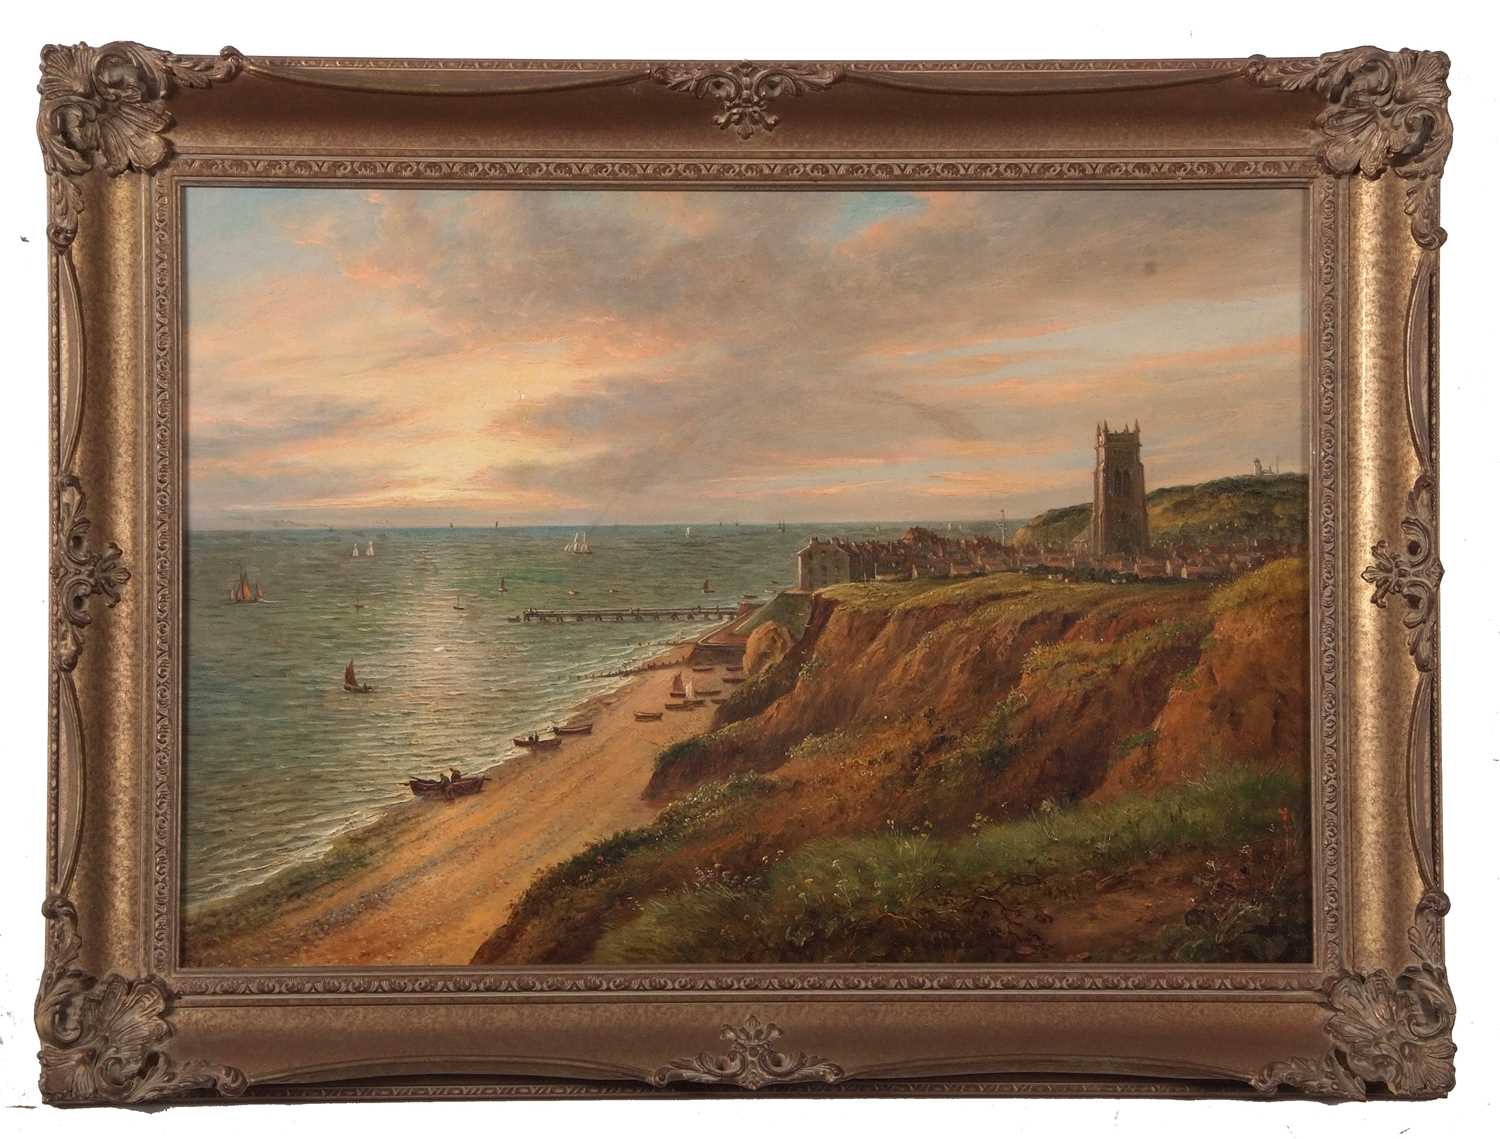 John Moore of Ipswich (1820-1902), "Cromer", oil on board, signed, 13x19ins, framed.